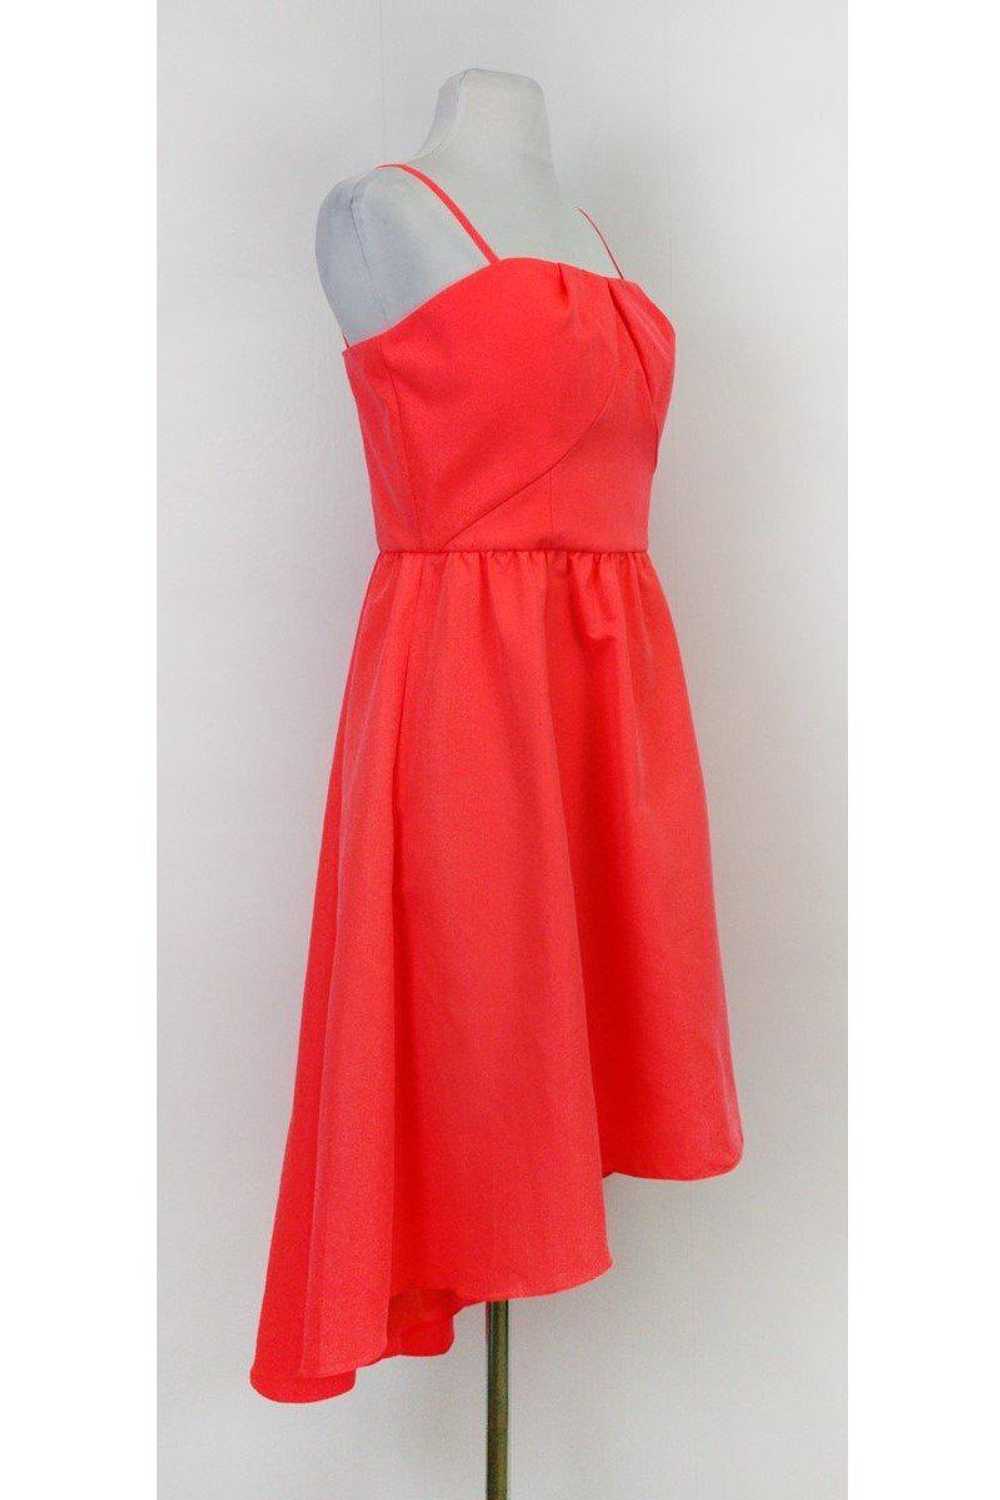 Ted Baker - Neon Orange Dress Sz 8 - image 2